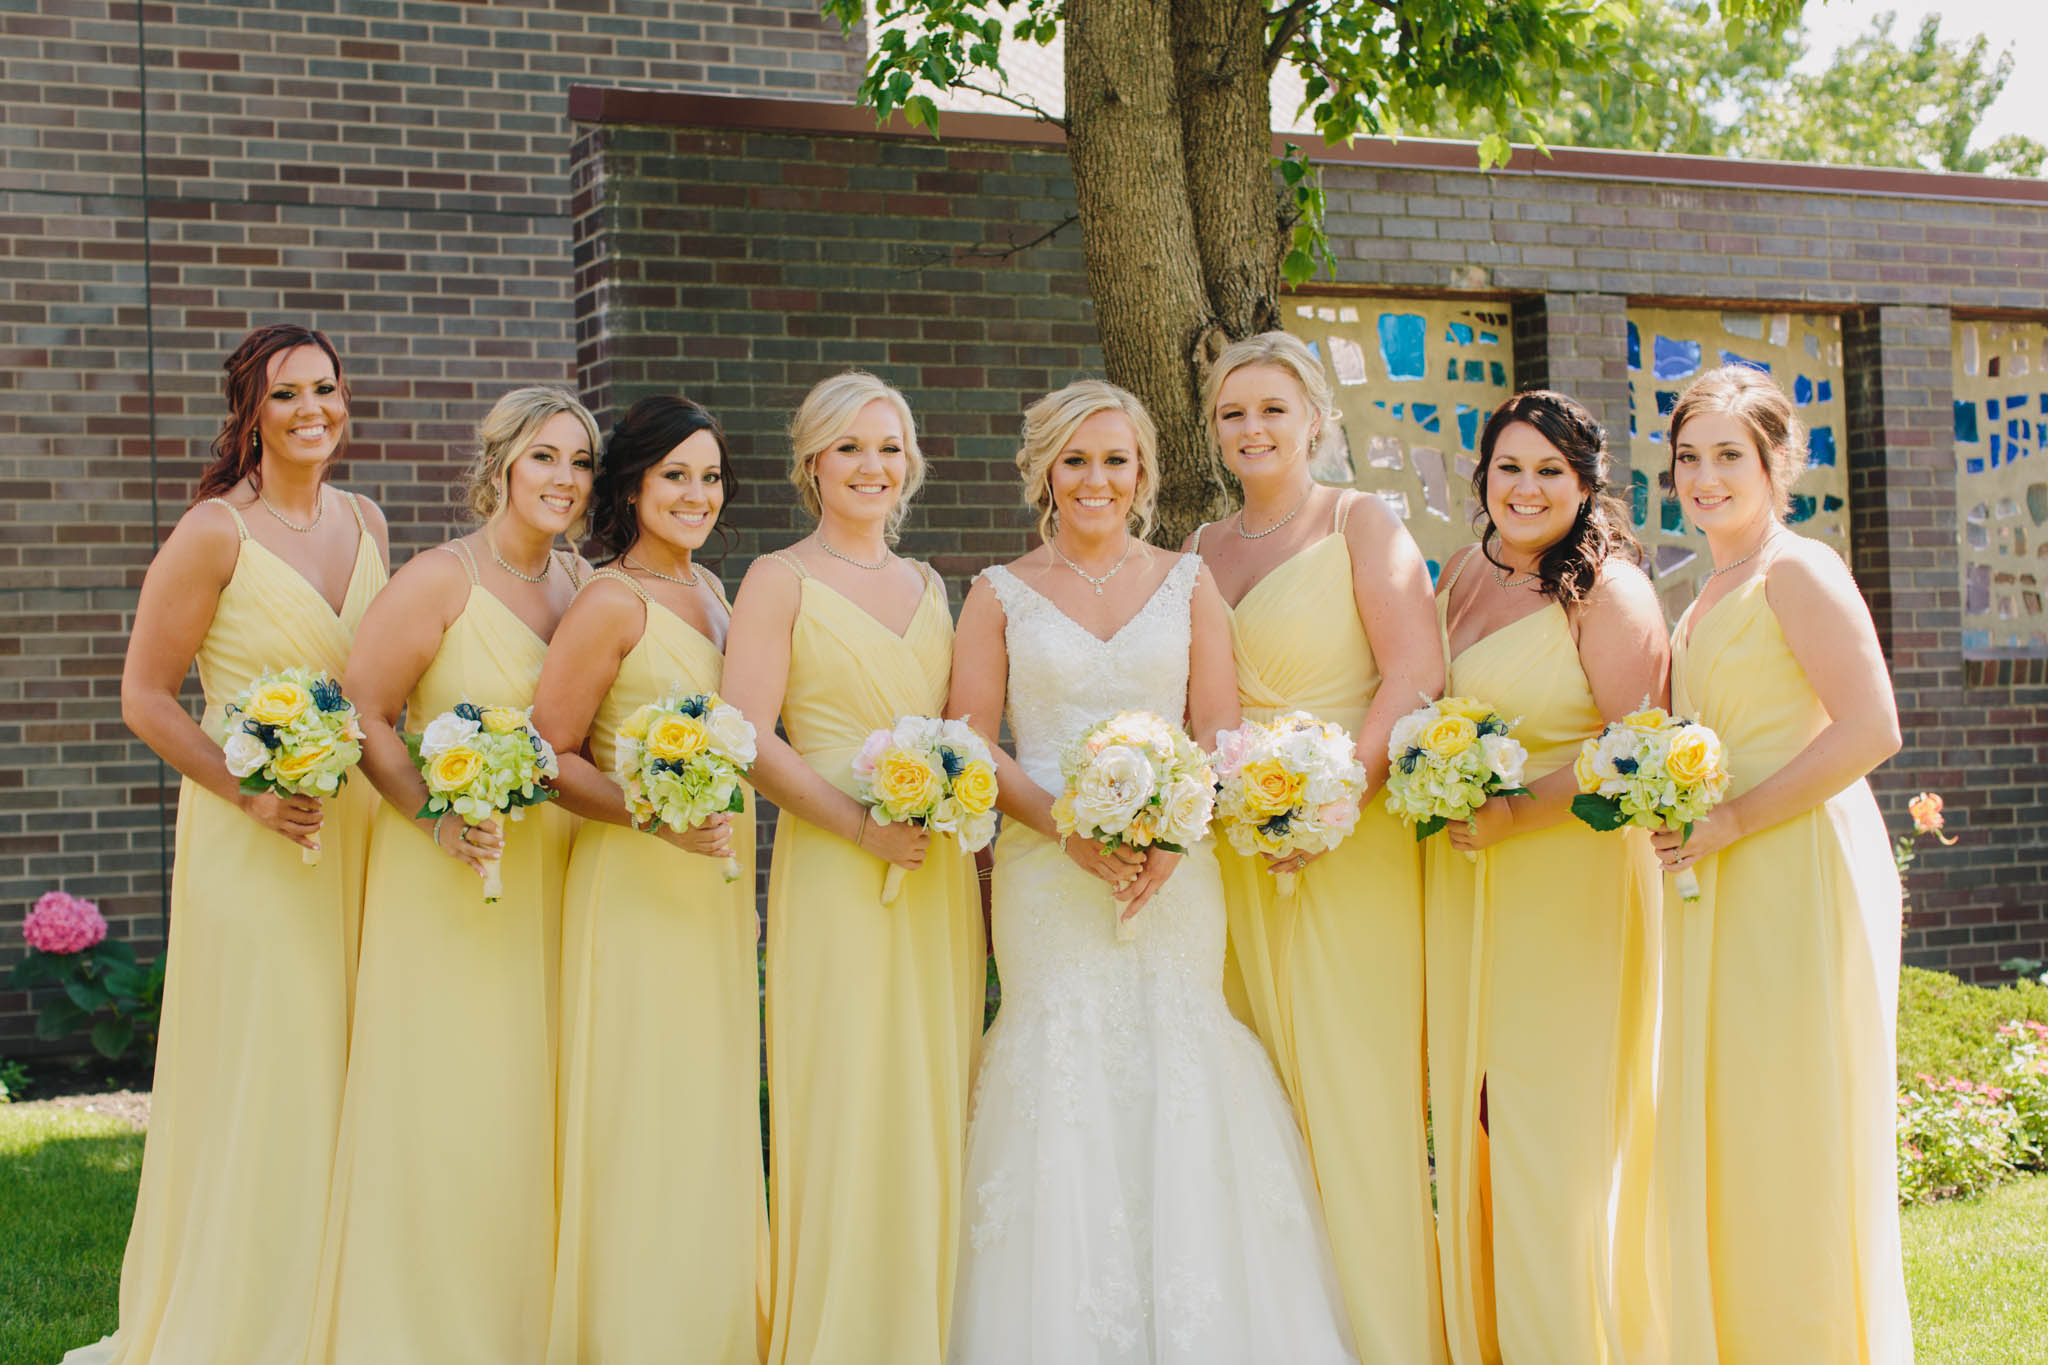 Jillian VanZytveld Photography - Grand Rapids Lifestyle Wedding Photography - 045.jpg